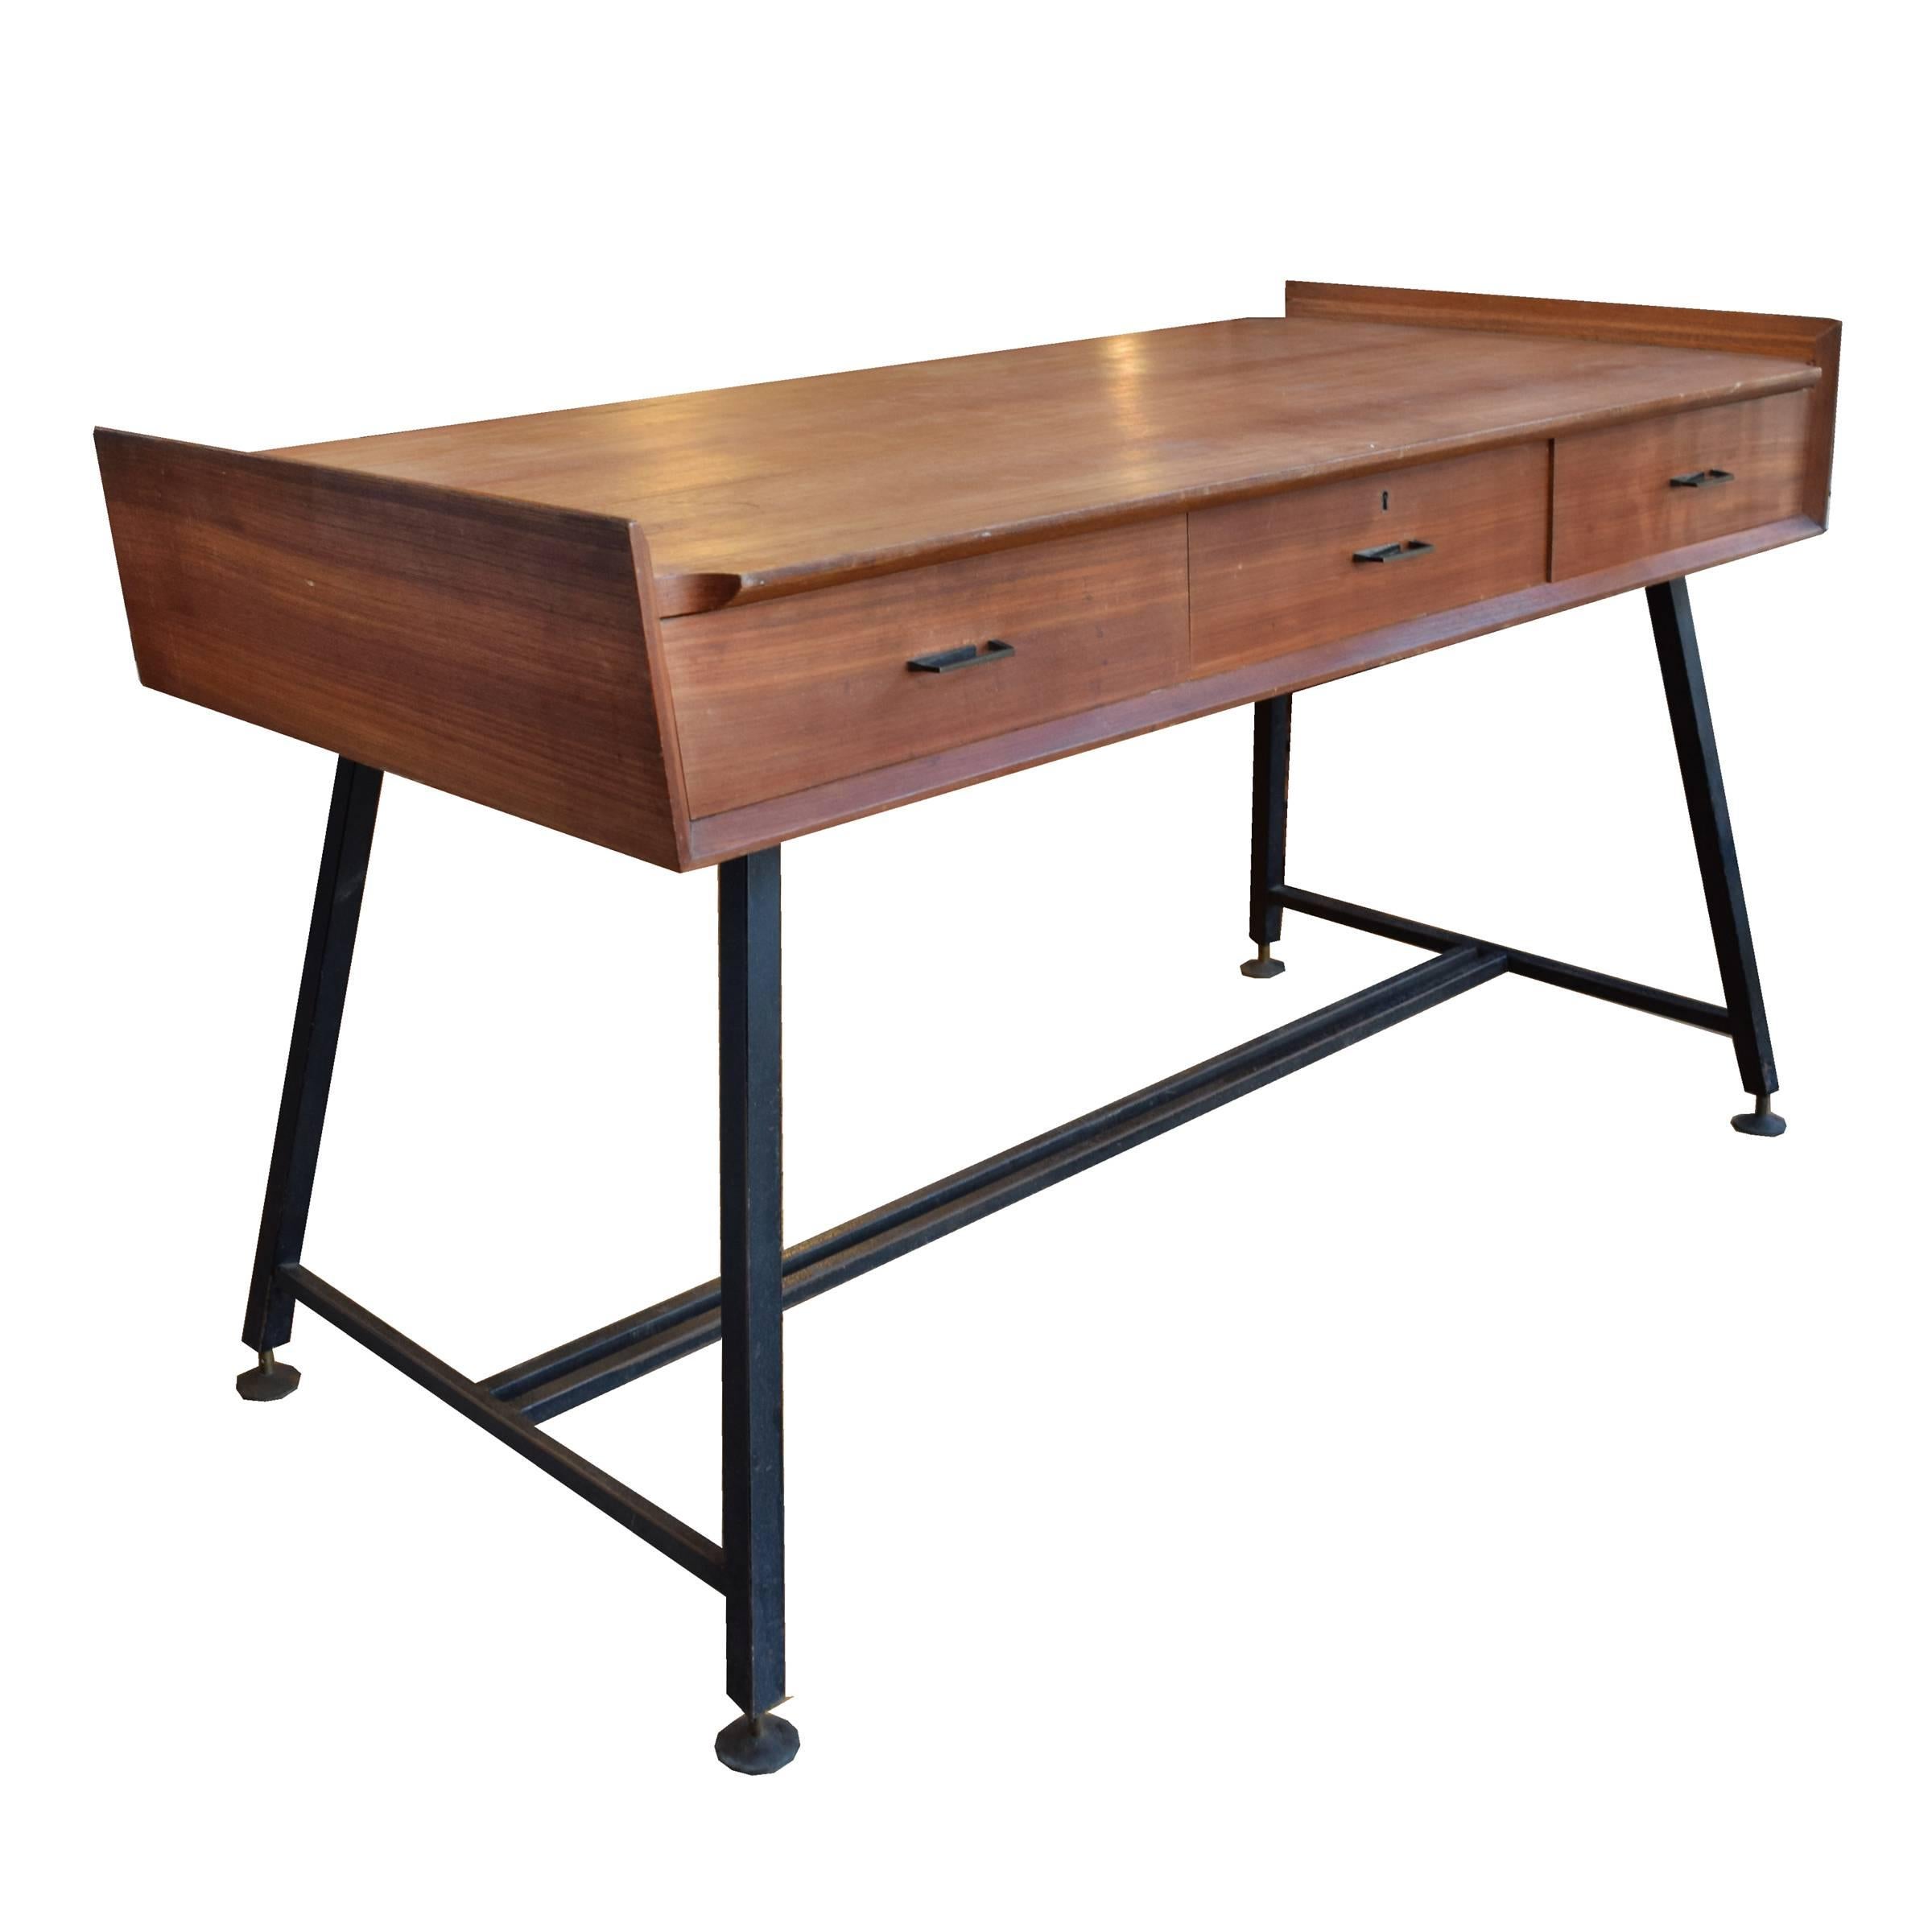 Italian Modern Double-Sided Table or Desk